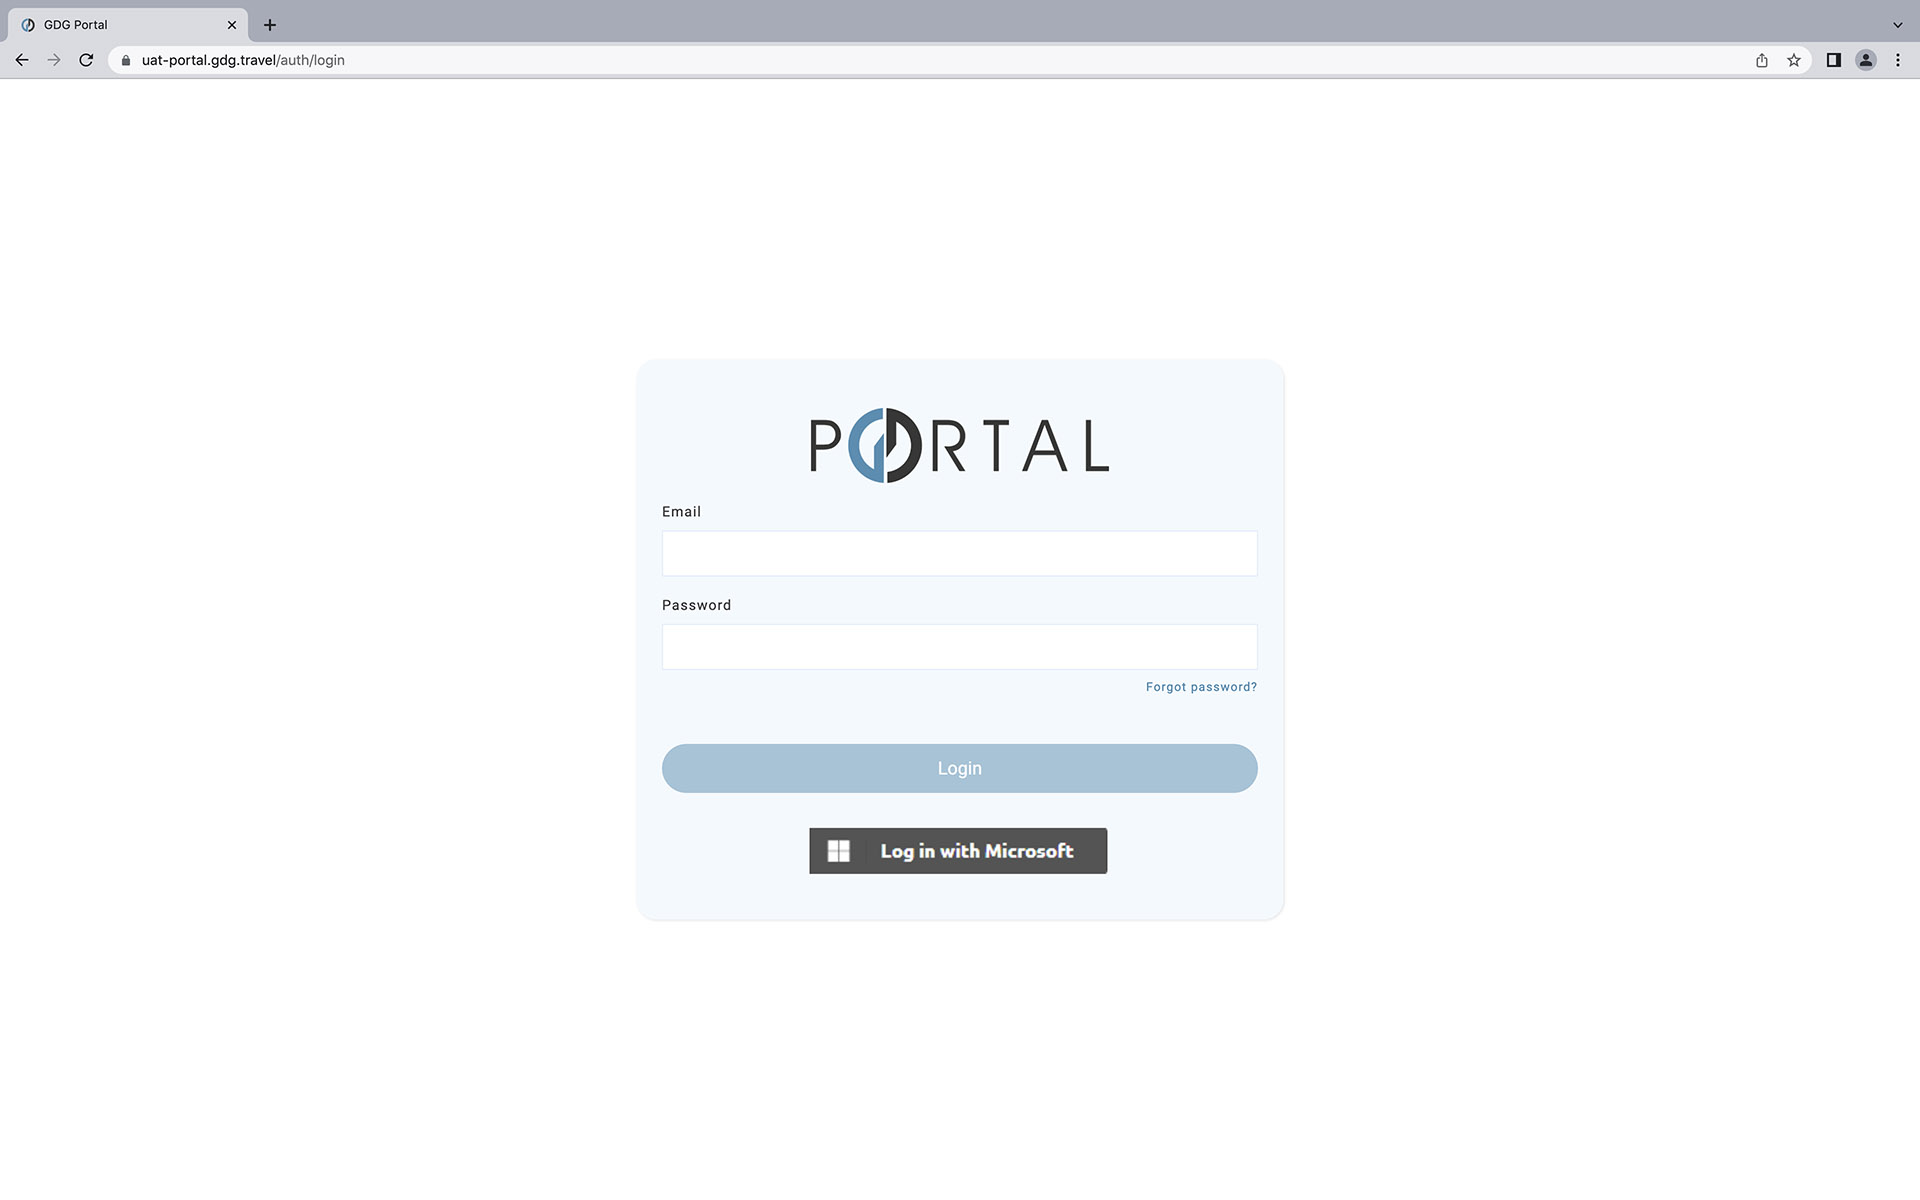 PORTAL login screen